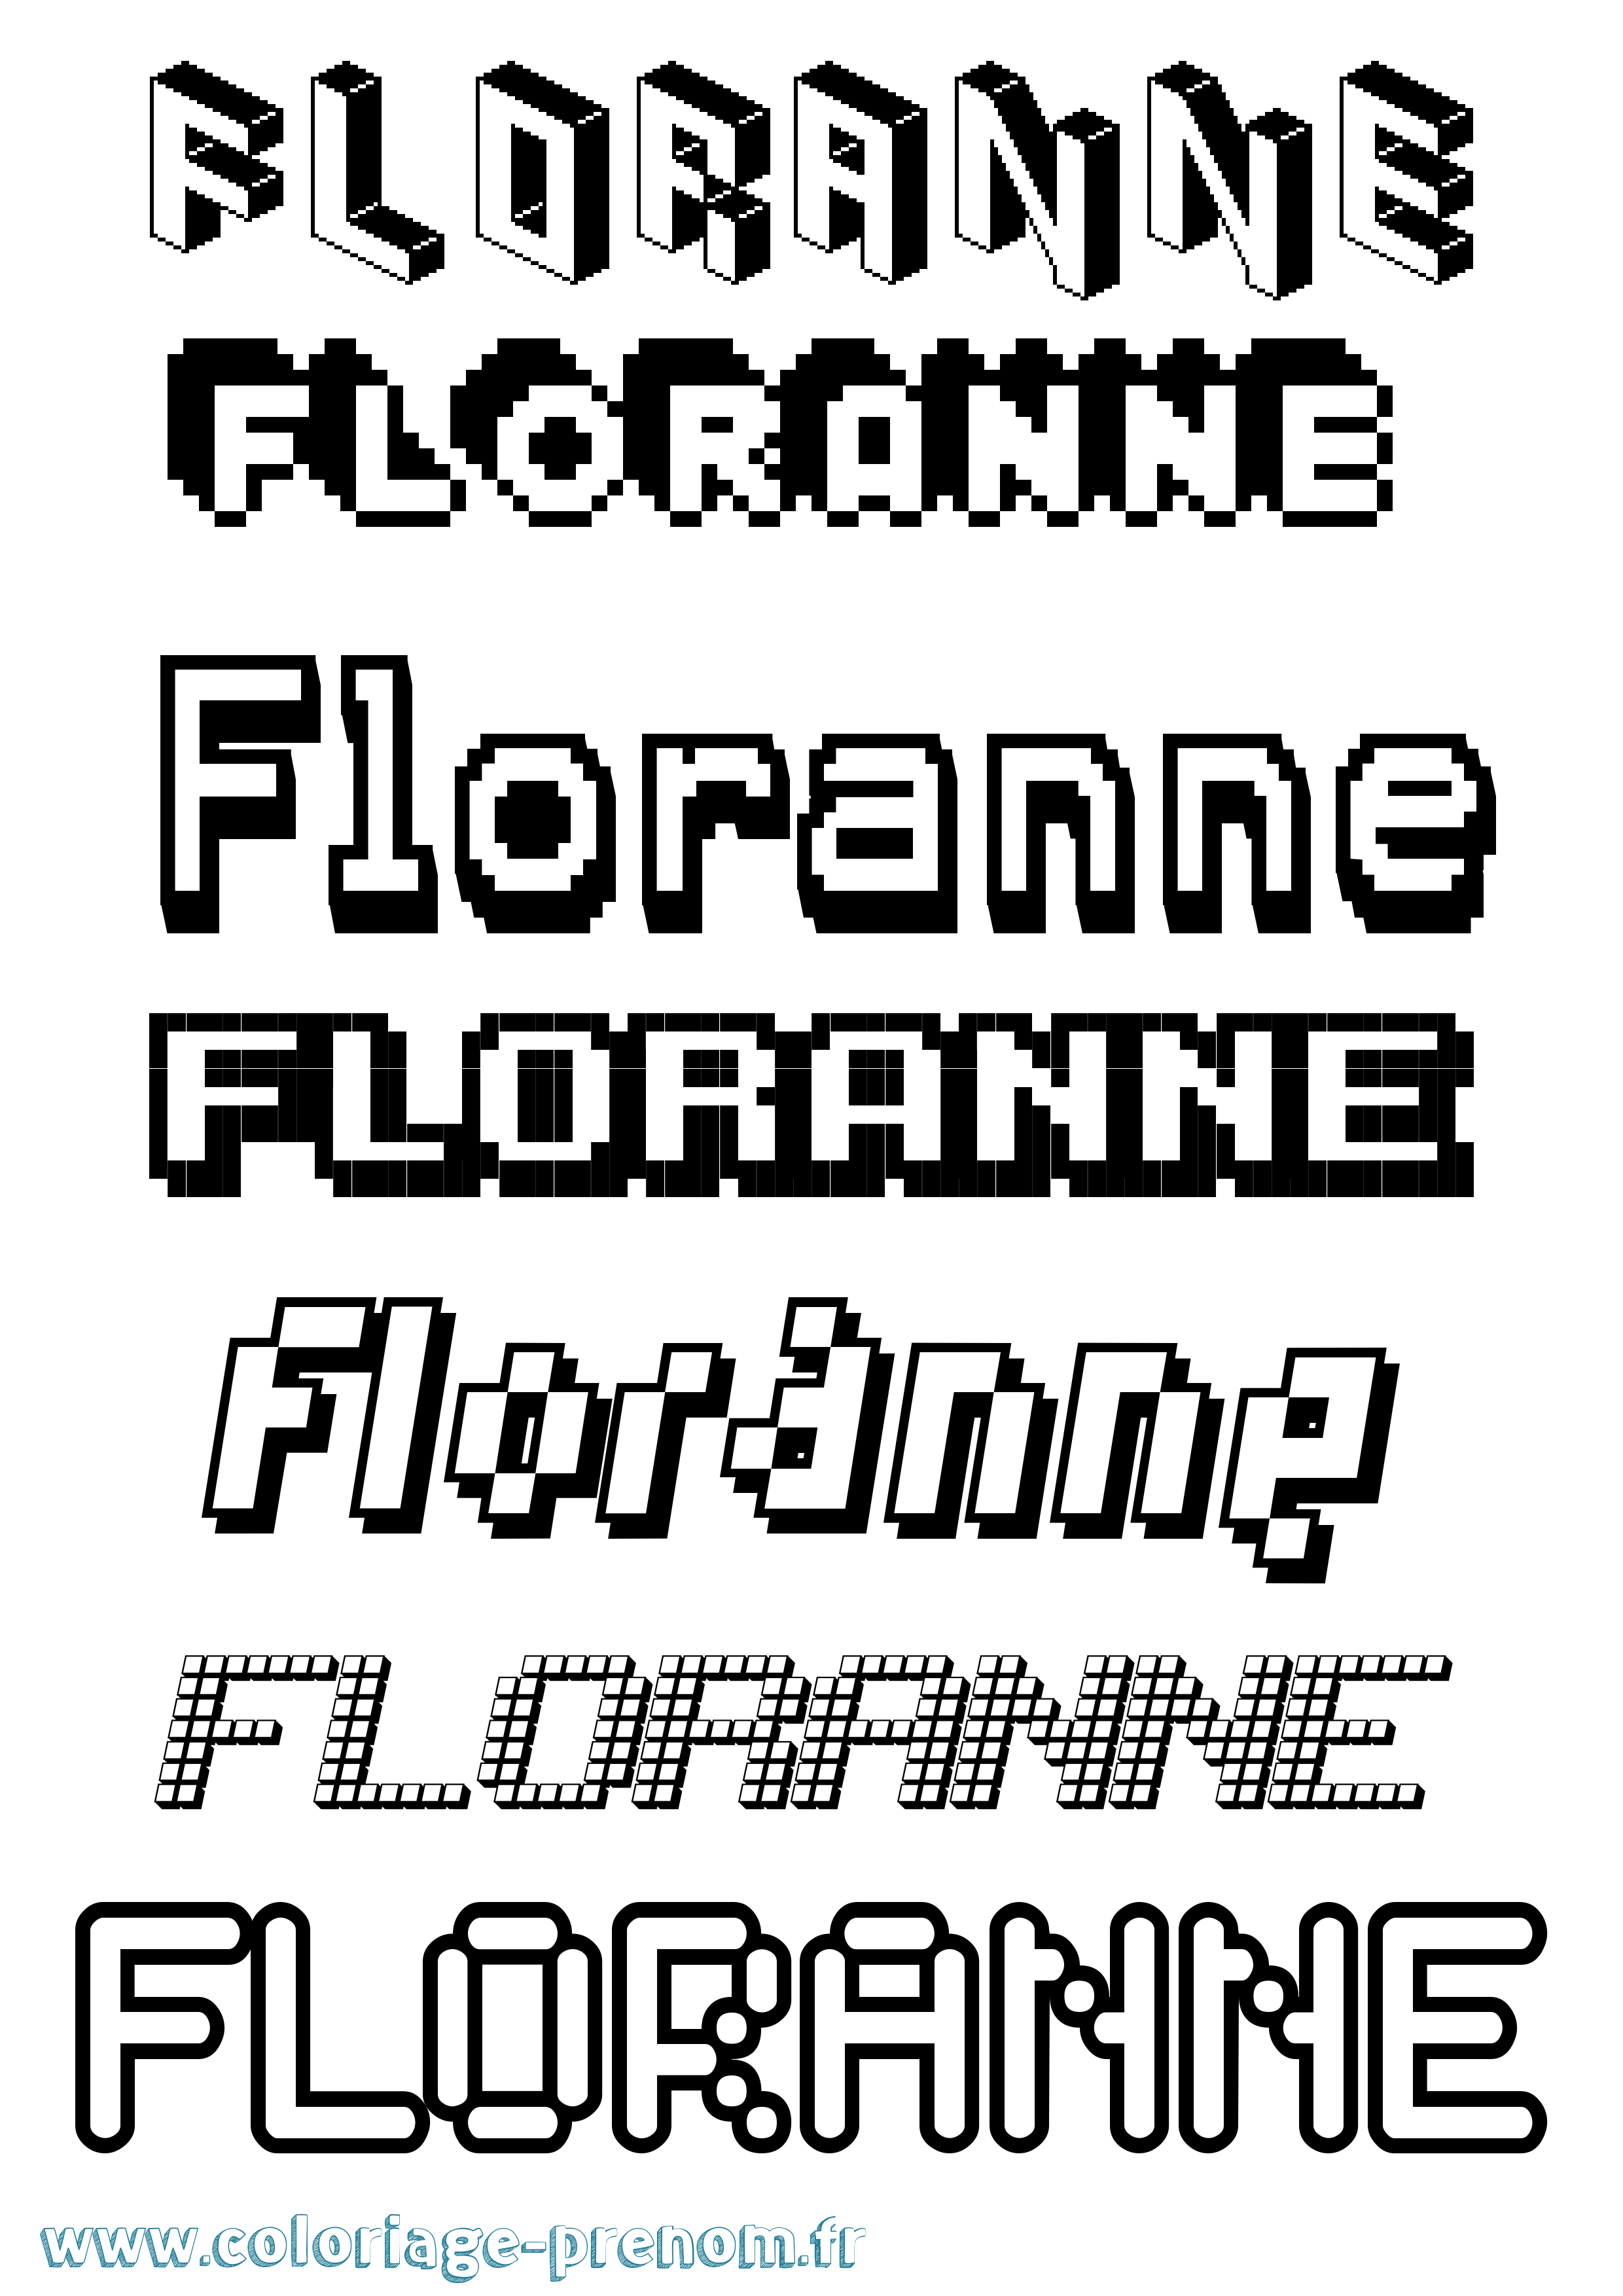 Coloriage prénom Floranne Pixel